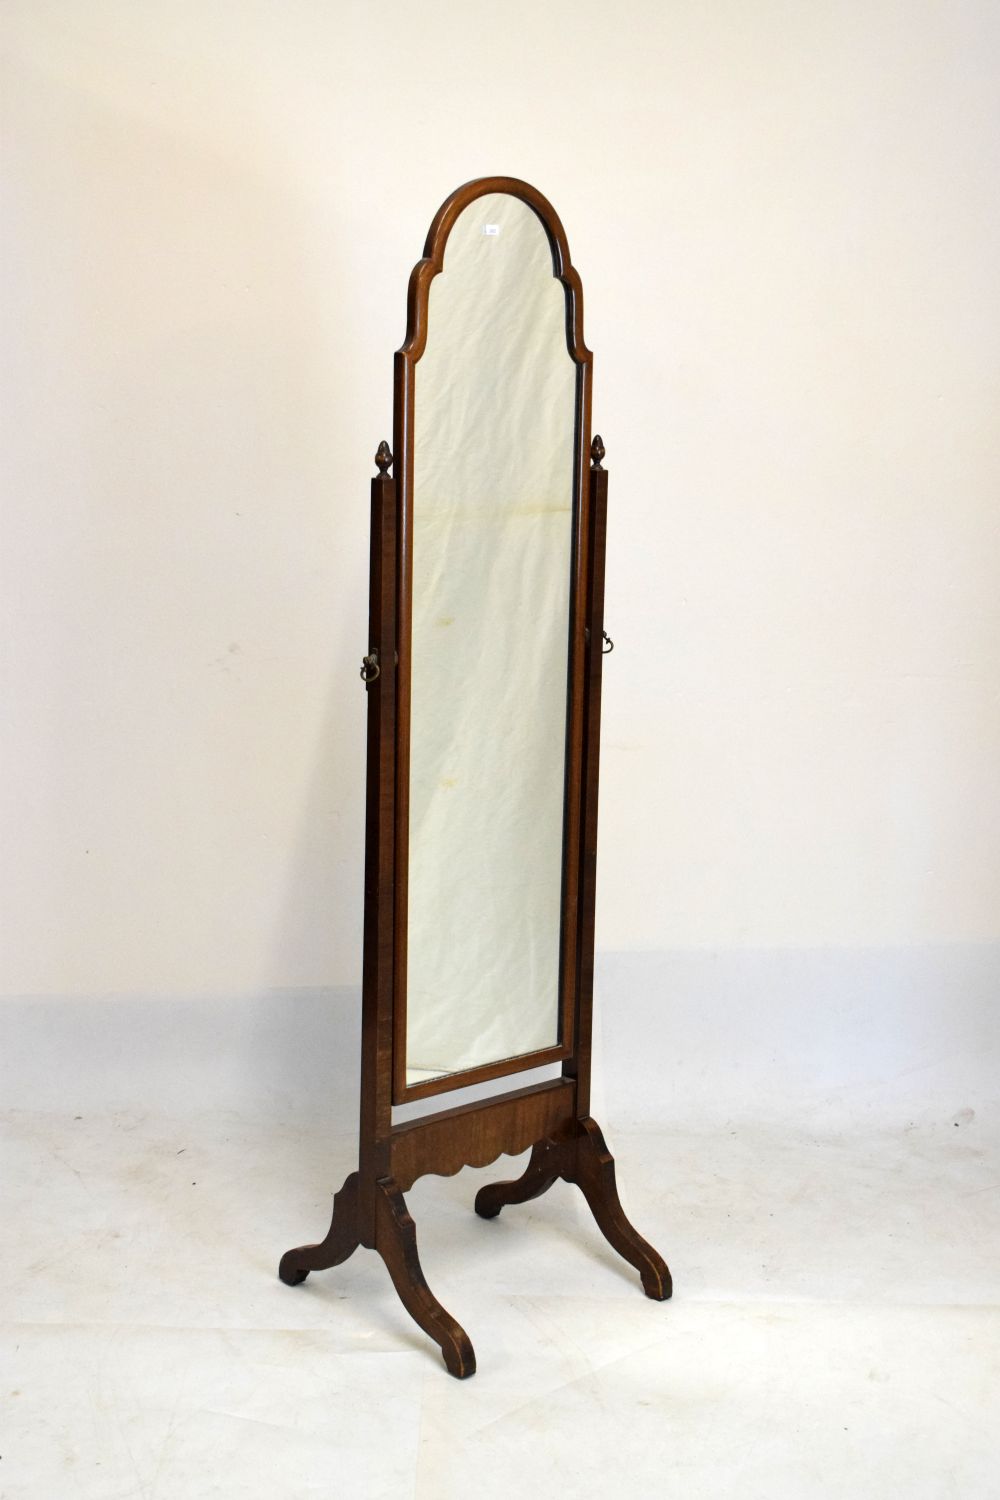 Mid 20th Century mahogany framed cheval mirror, 158cm high x 43cm wide